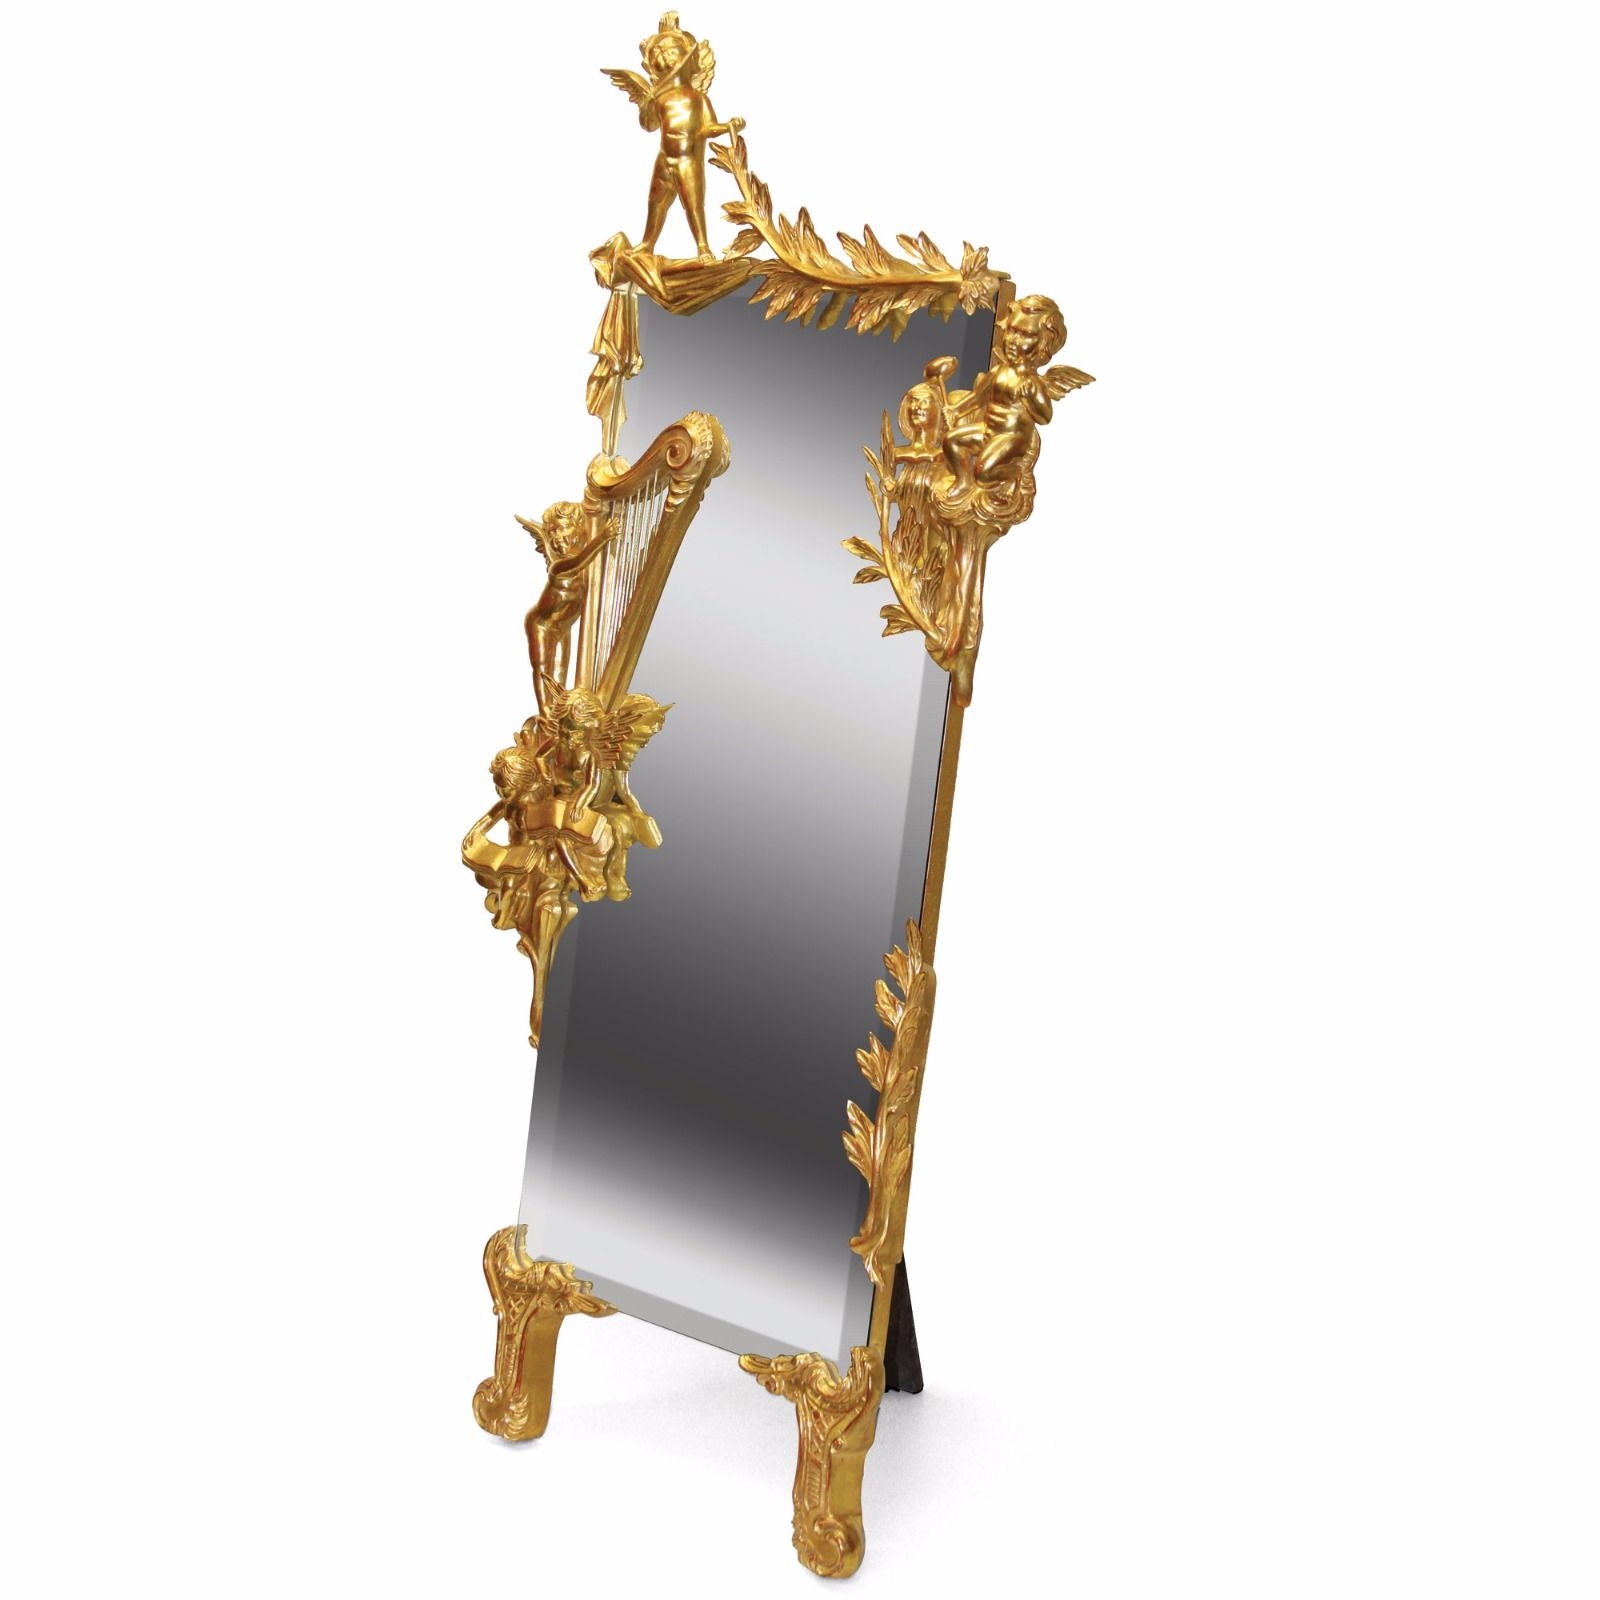 Water gilded cherub cheval mirror – 60in.